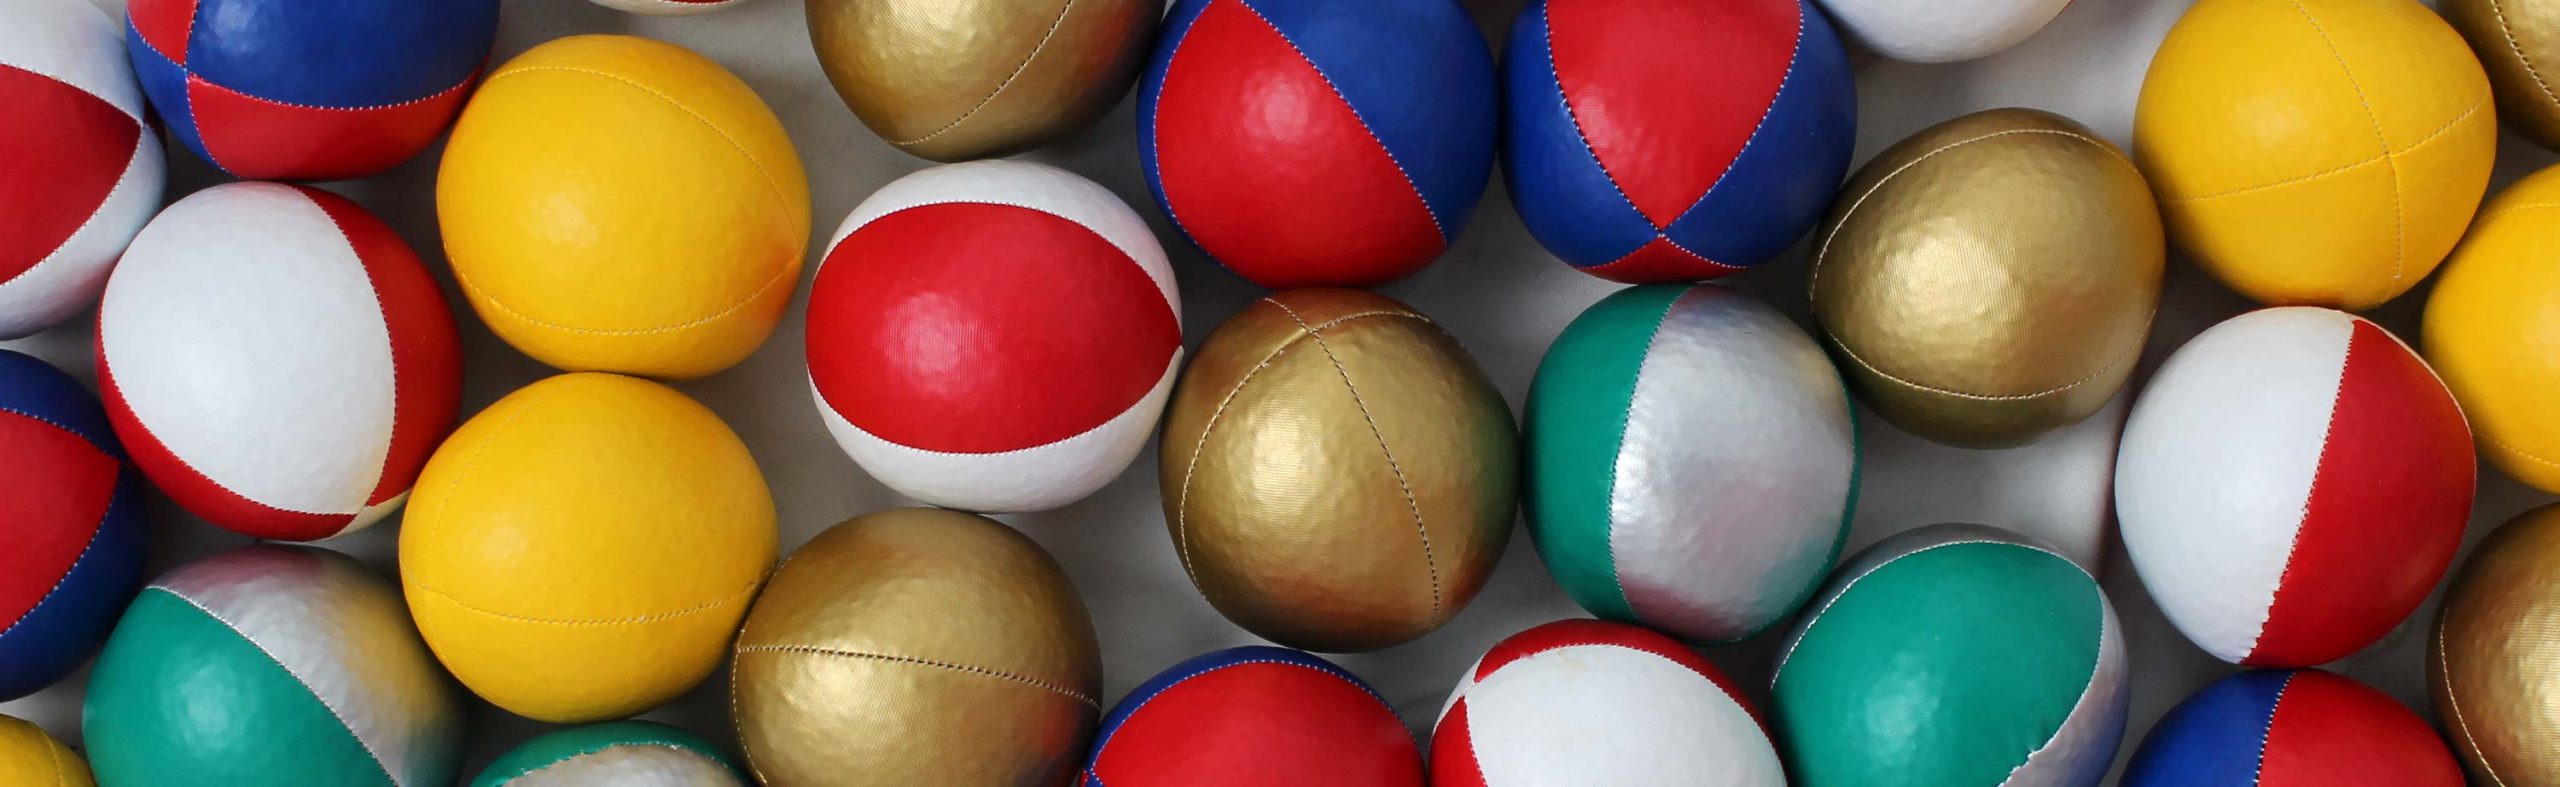 Several coloured juggling balls